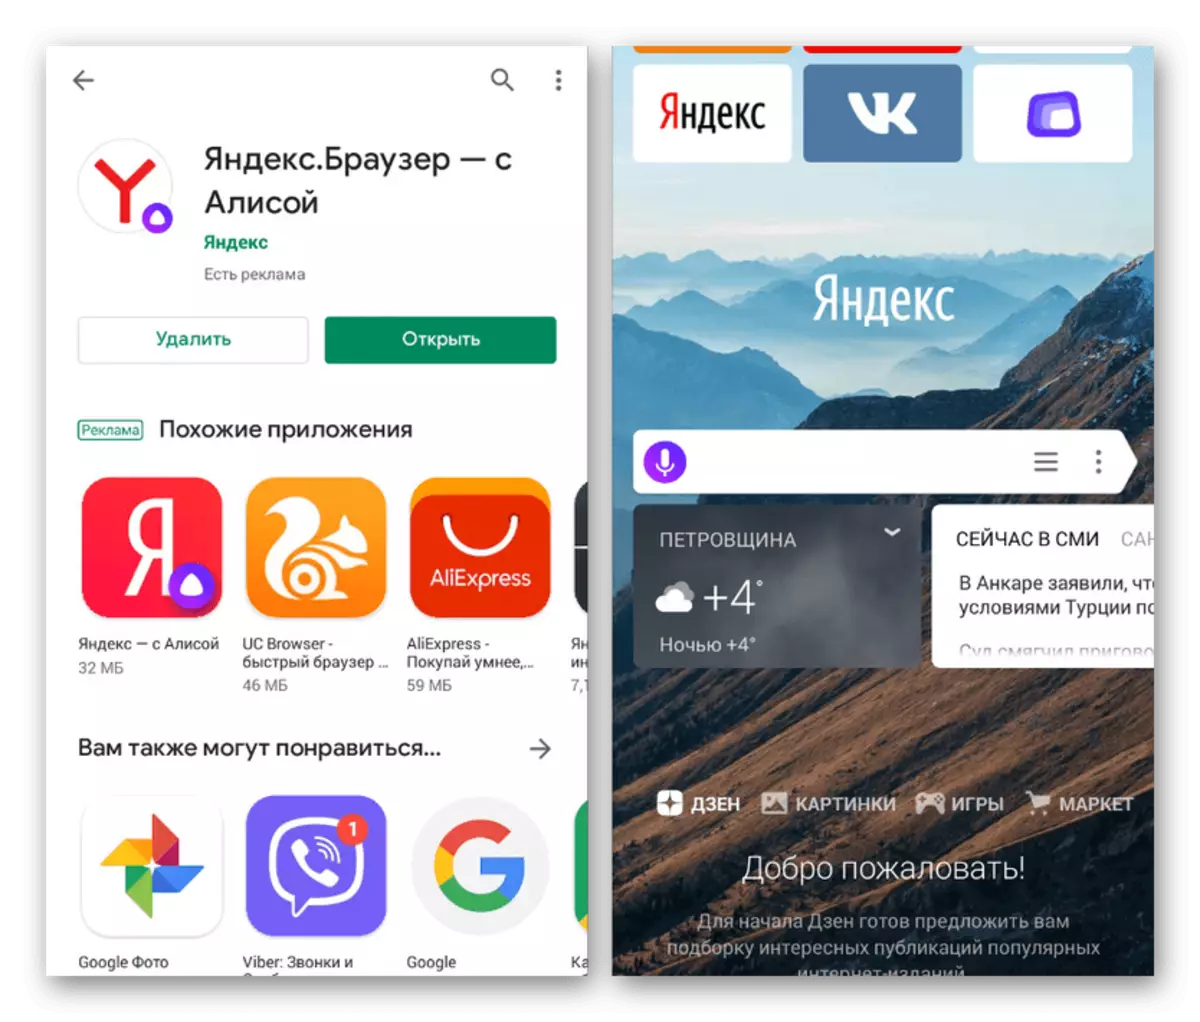 Minta Yandex Start oldal a Yandex.Browserben